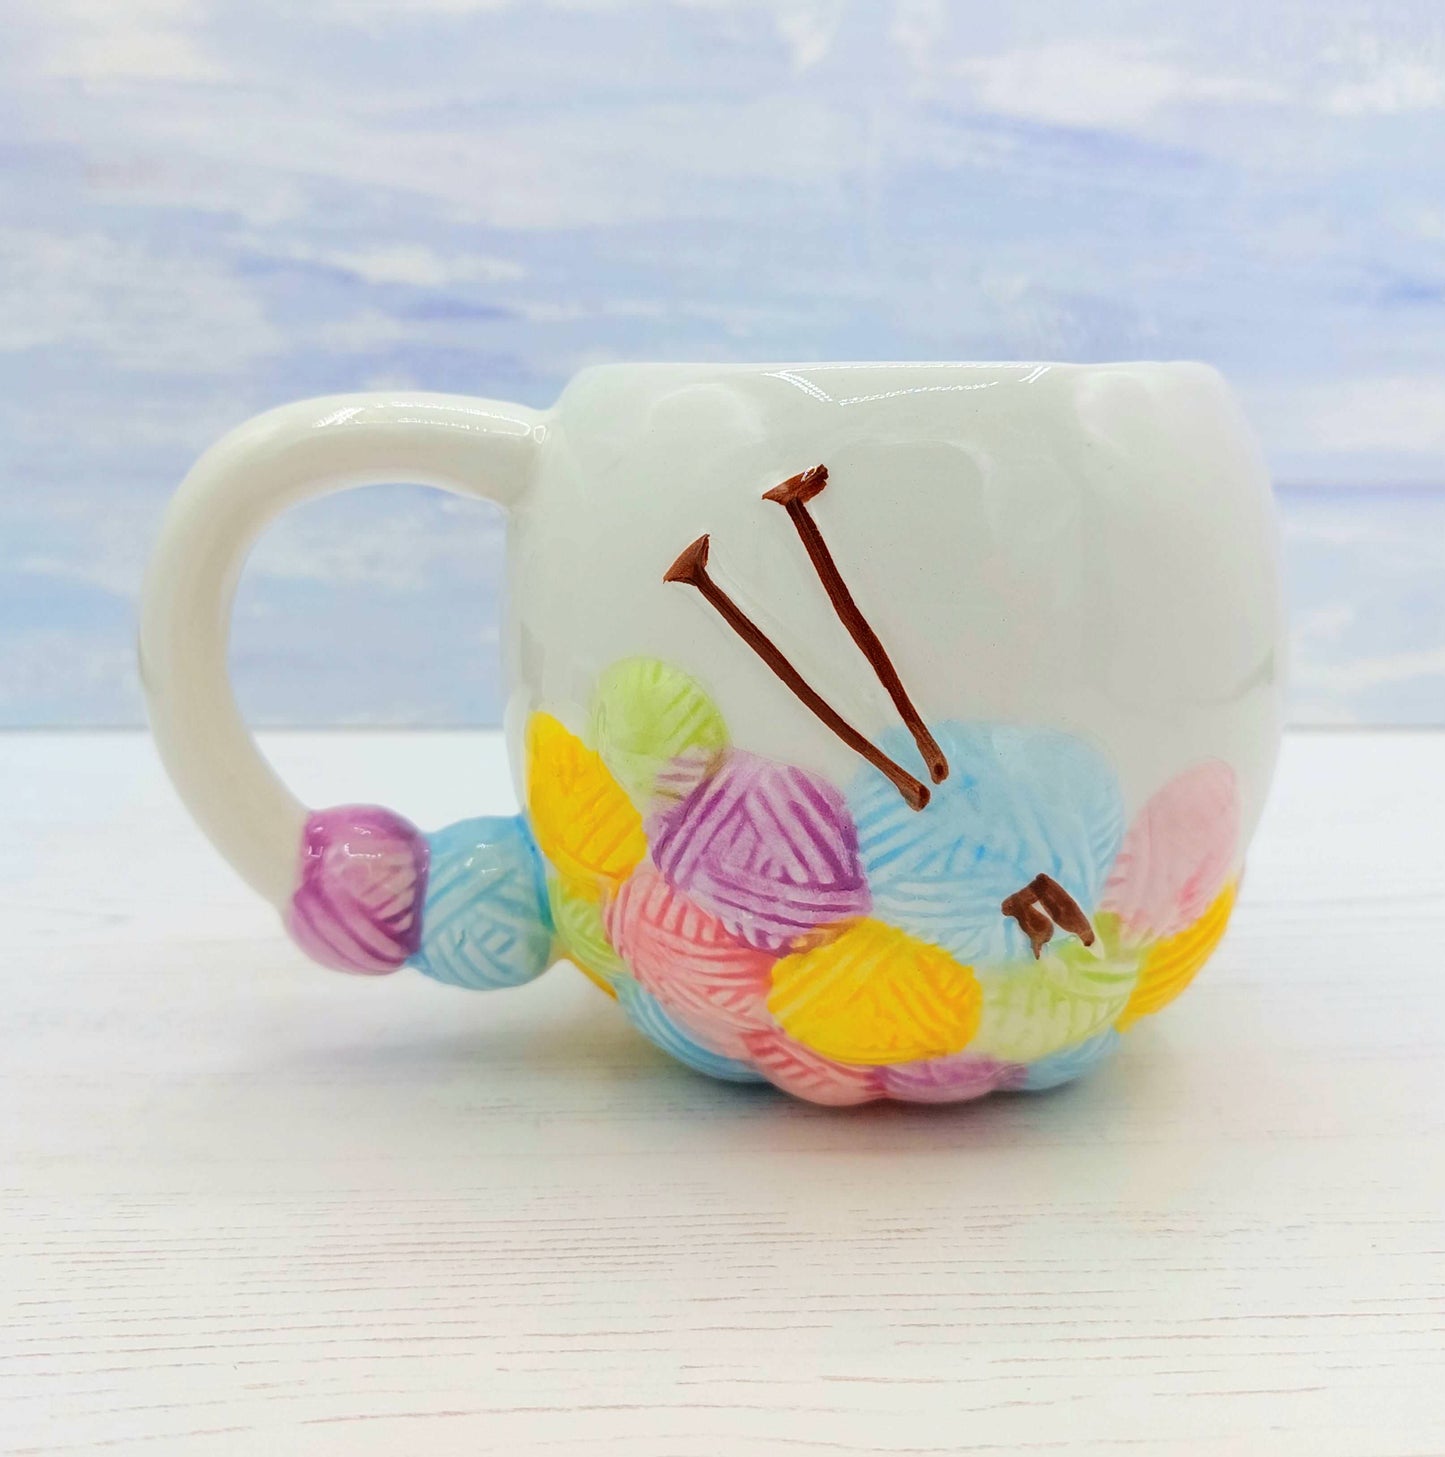 Novelty Knitting Wool Mug or Desk Organiser - the perfect crafty gift!